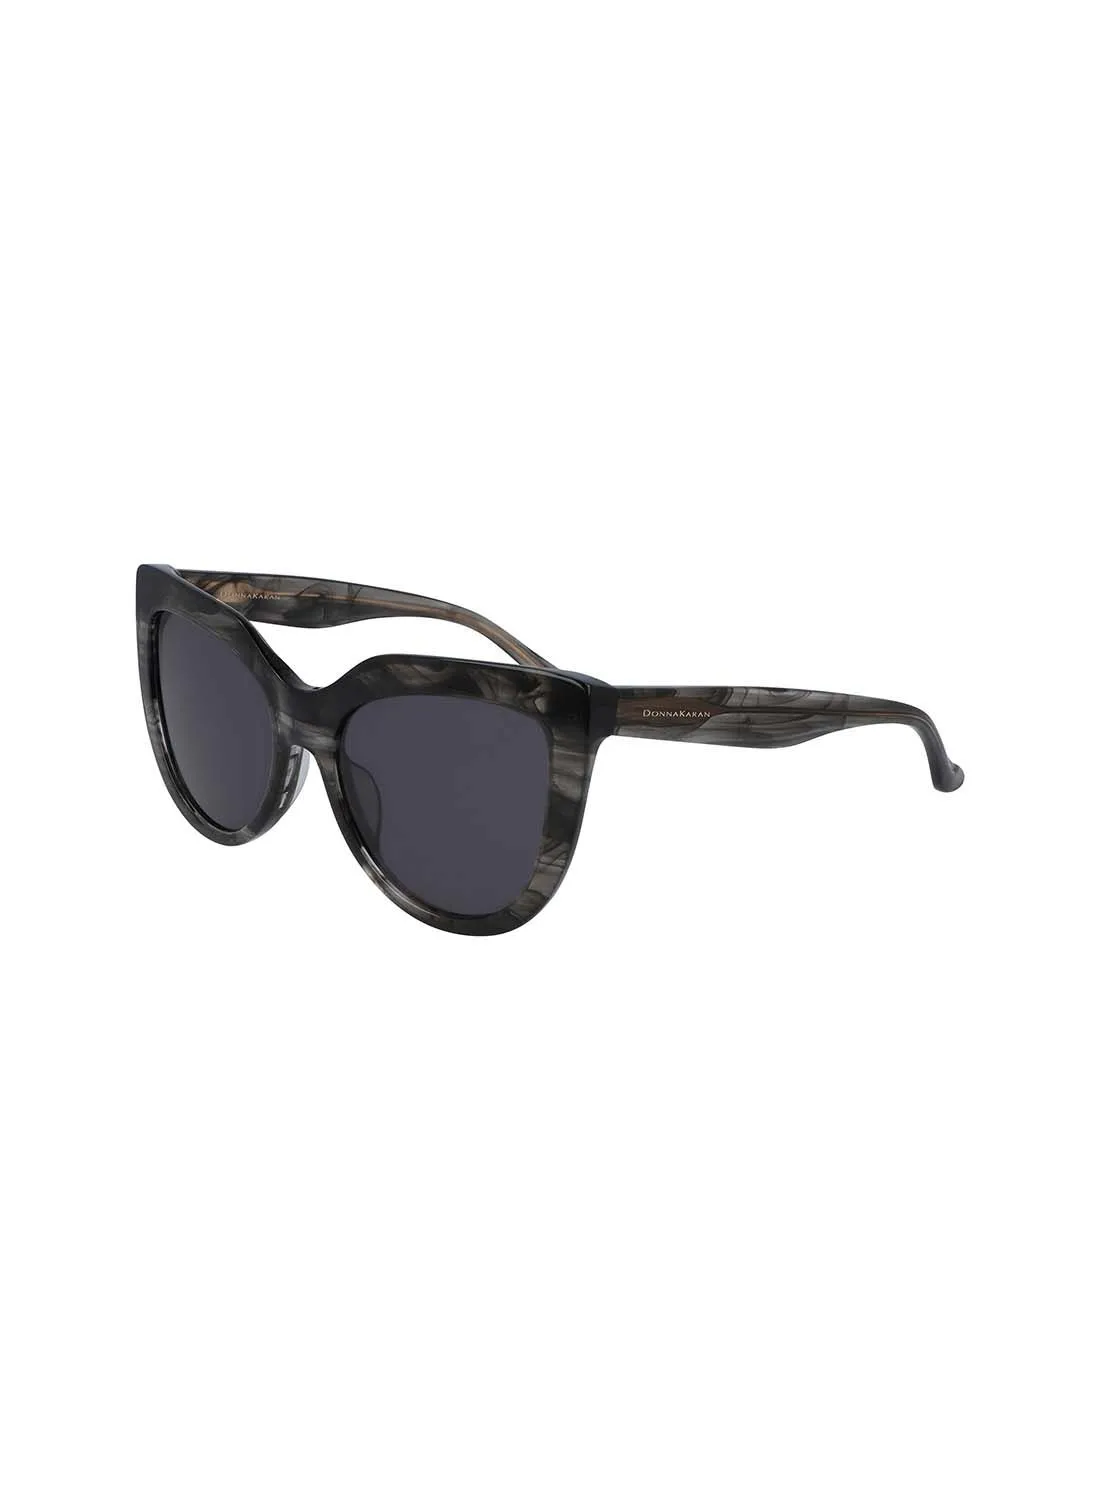 Donna Karan Full Rim Acetate Cat Eye Sunglasses DO501S 5418 (039)